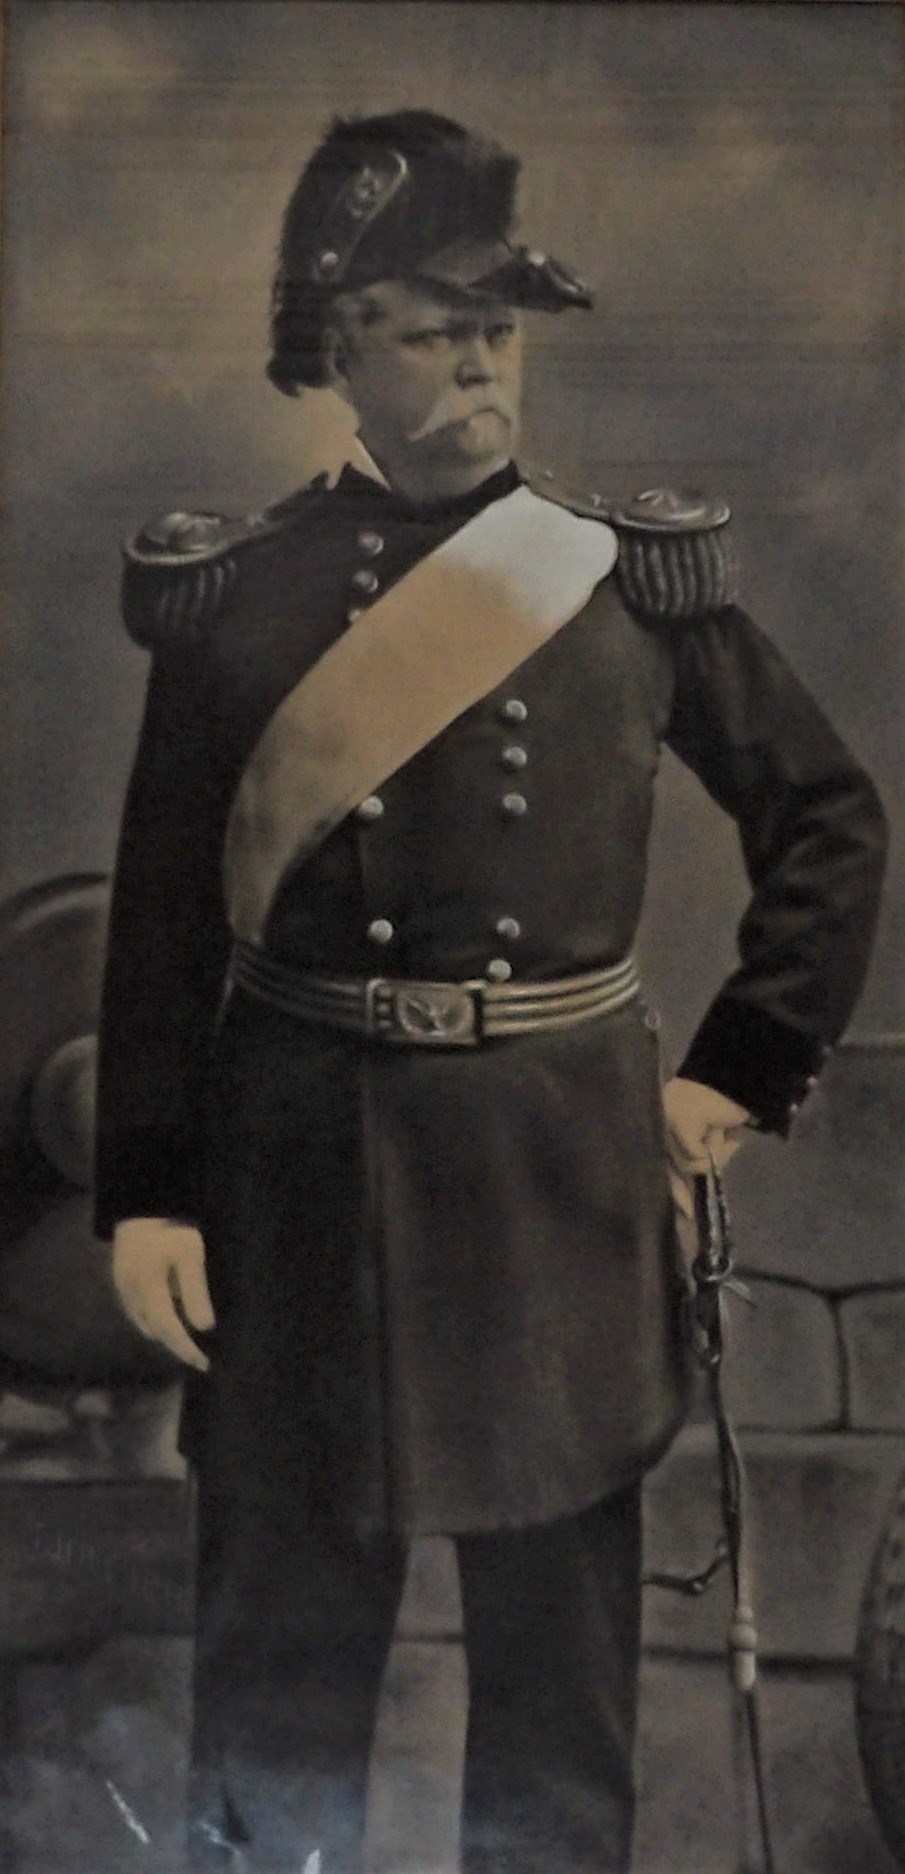 Portrait of General Winfield Scott Hancock